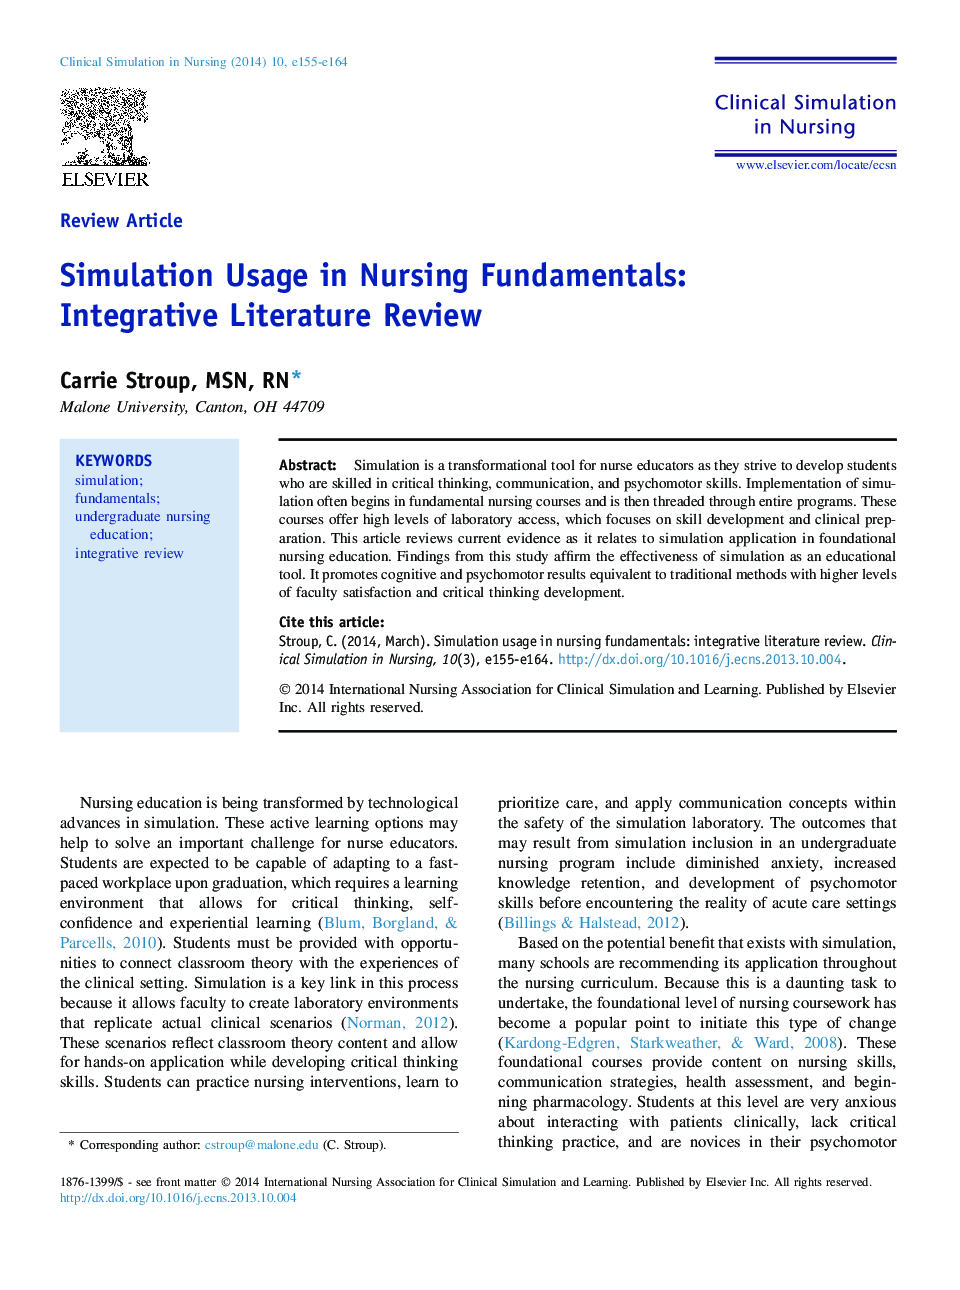 Simulation Usage in Nursing Fundamentals: Integrative Literature Review